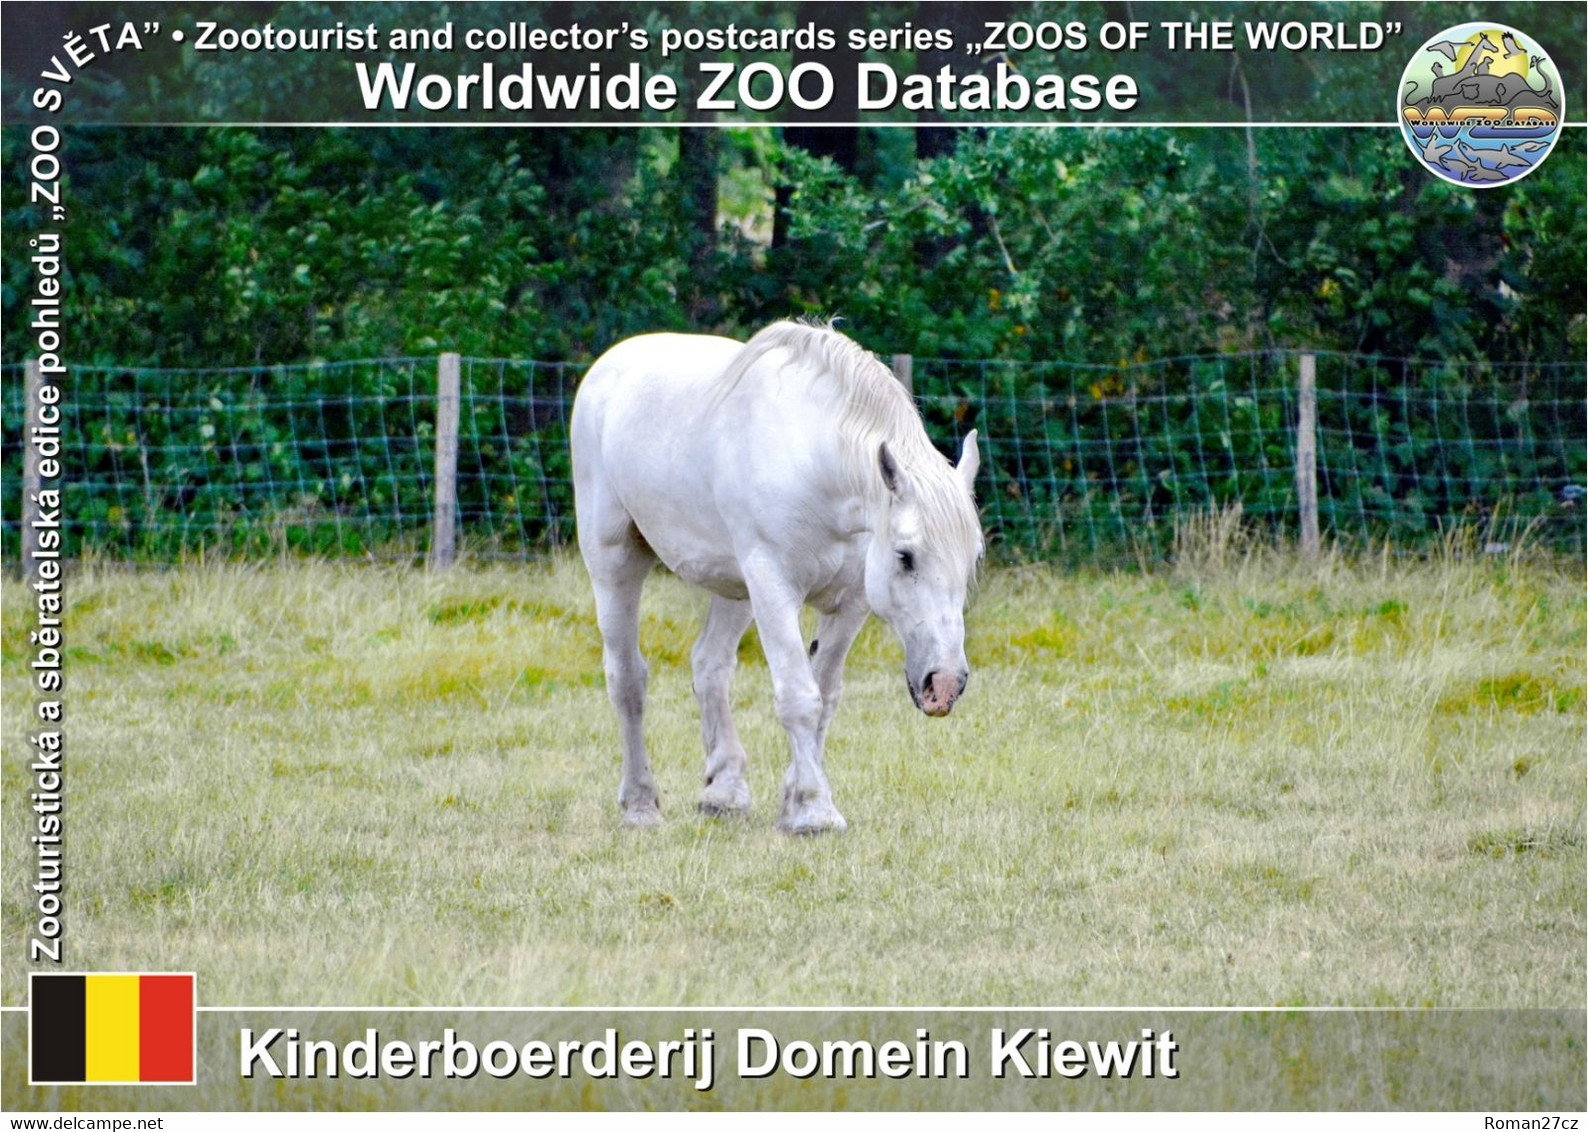 01193 Kinderboerderij Domein Kiewit, BE - Domestic Horse (Equus Ferus F. Caballus) - Hasselt